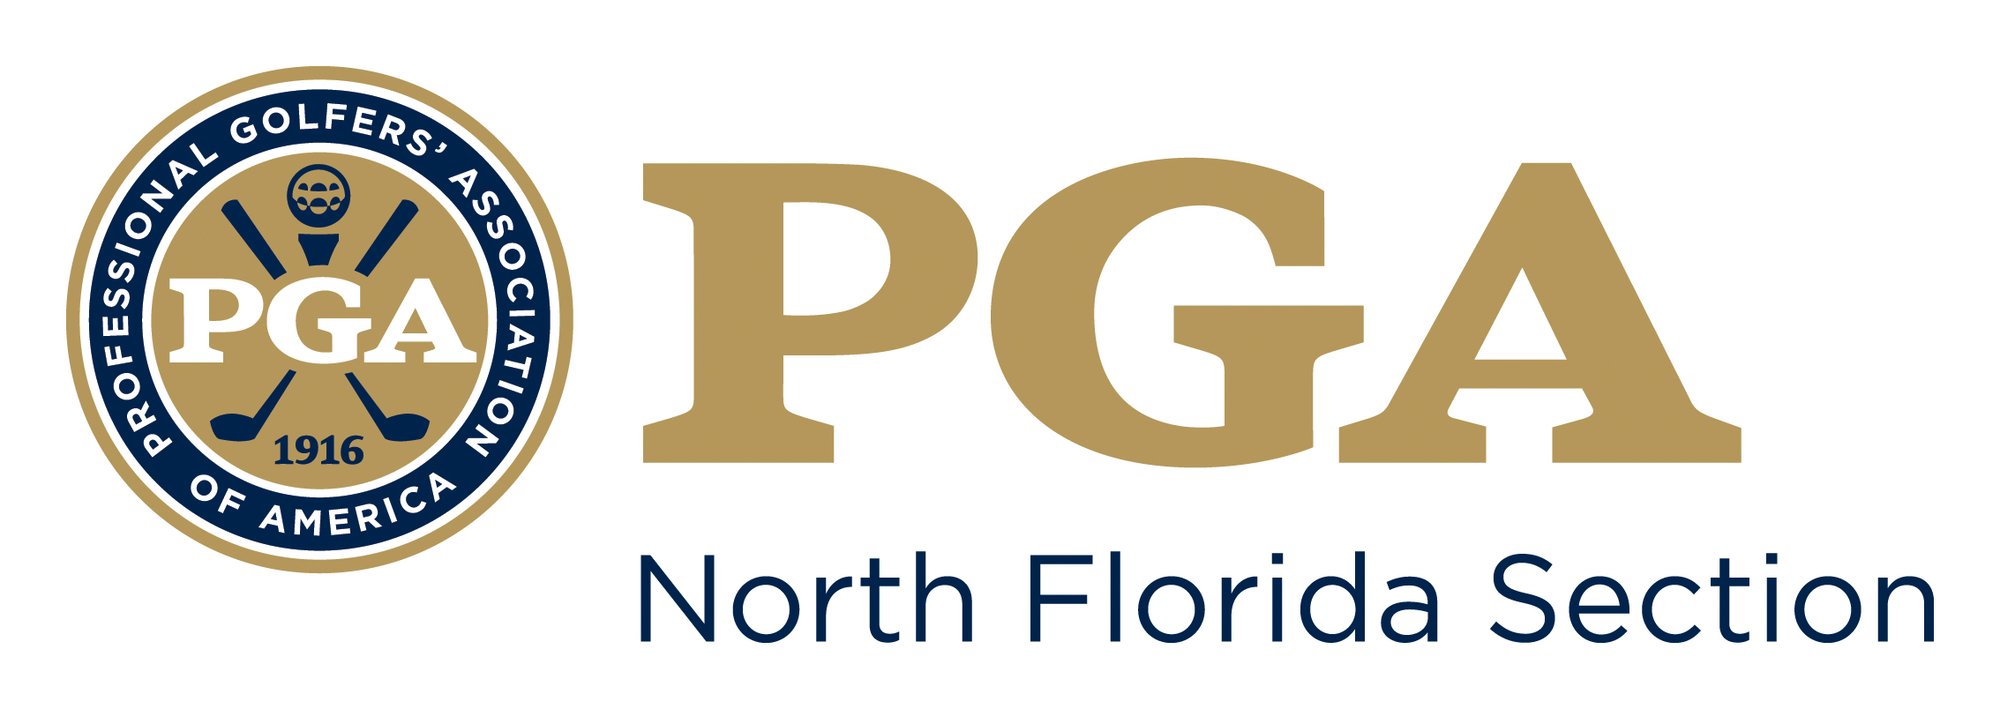 NFPGA partner logo